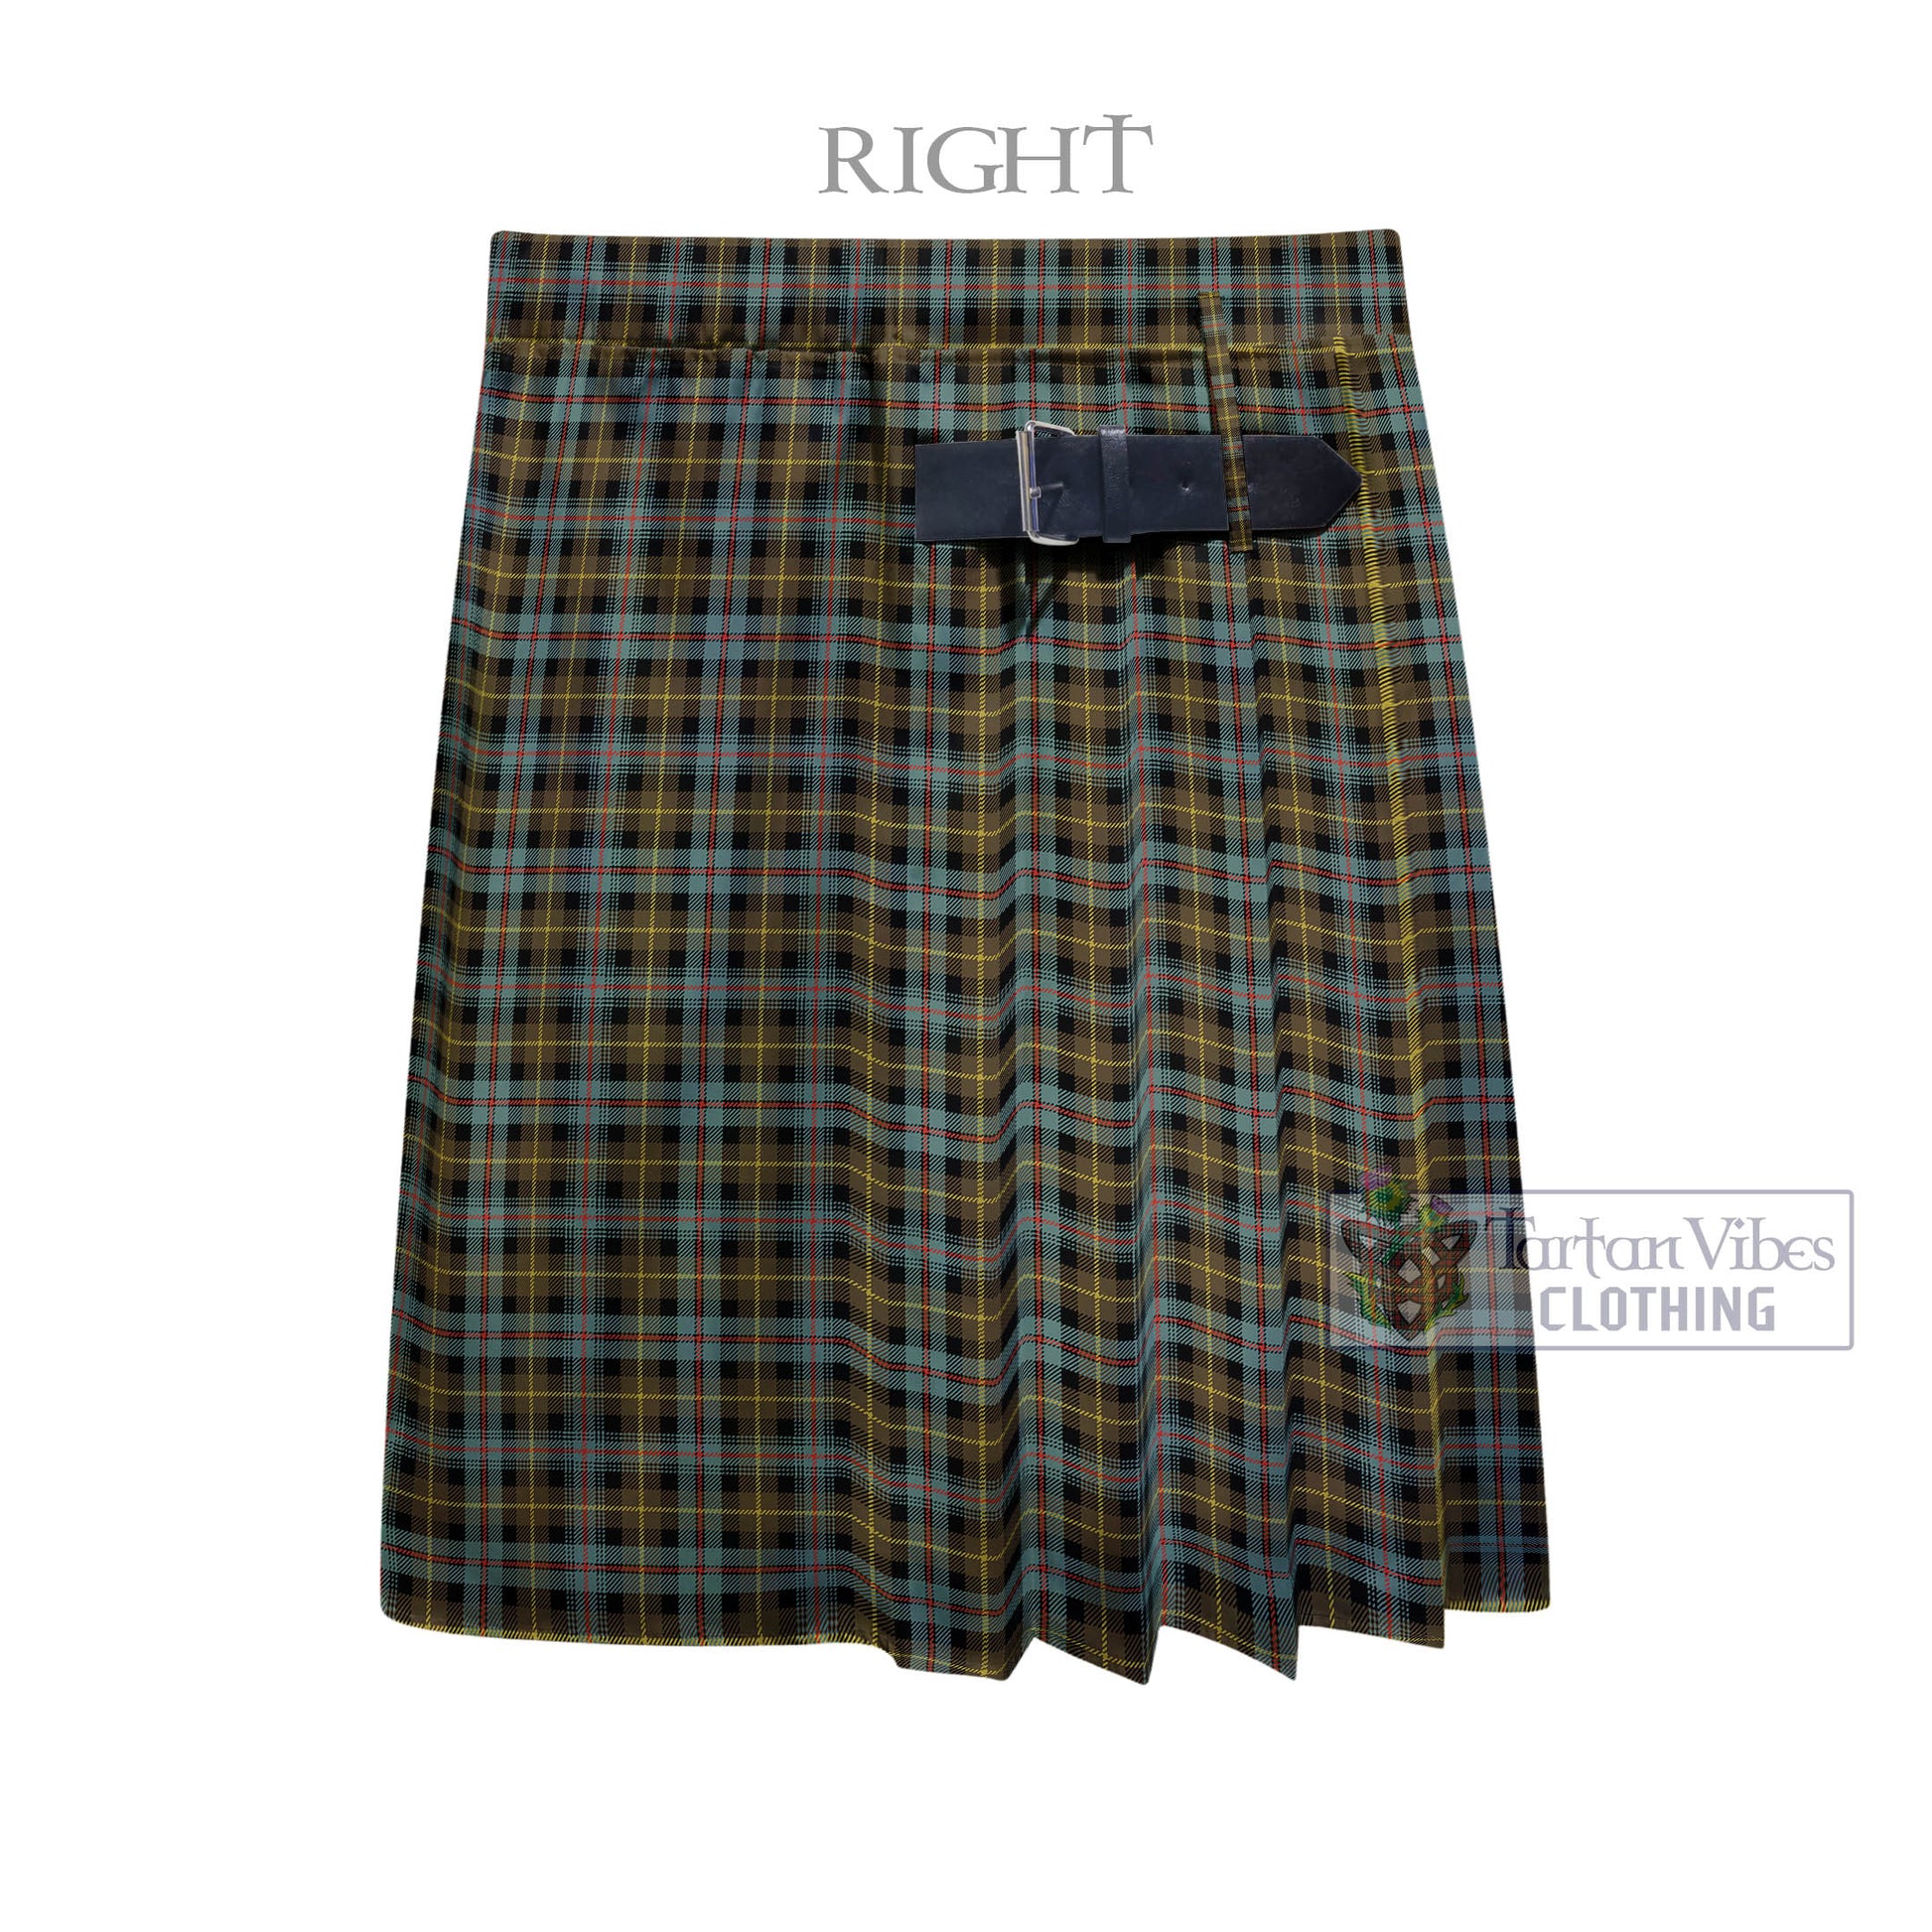 Tartan Vibes Clothing Farquharson Weathered Tartan Men's Pleated Skirt - Fashion Casual Retro Scottish Style